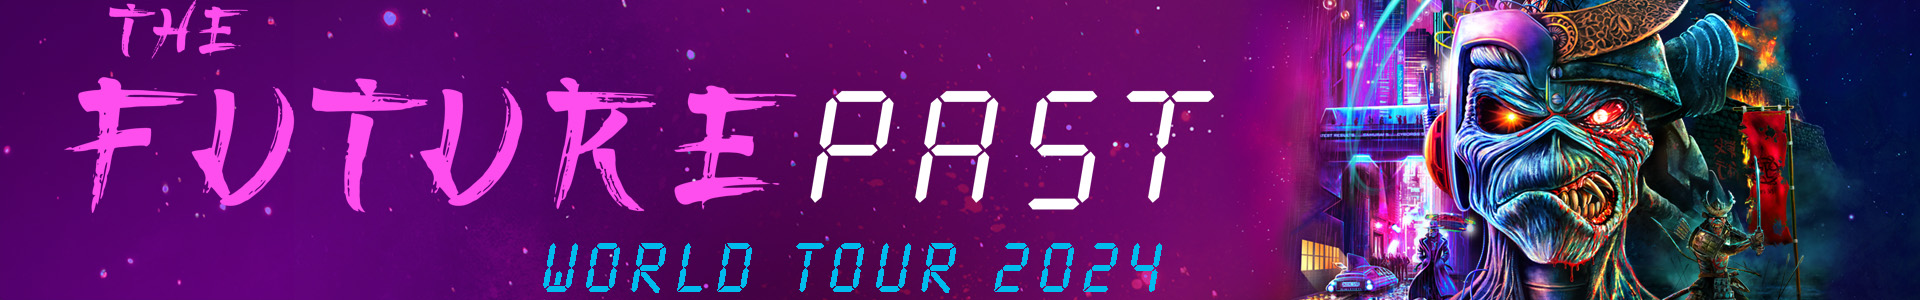 The Future Past Tour - 2024